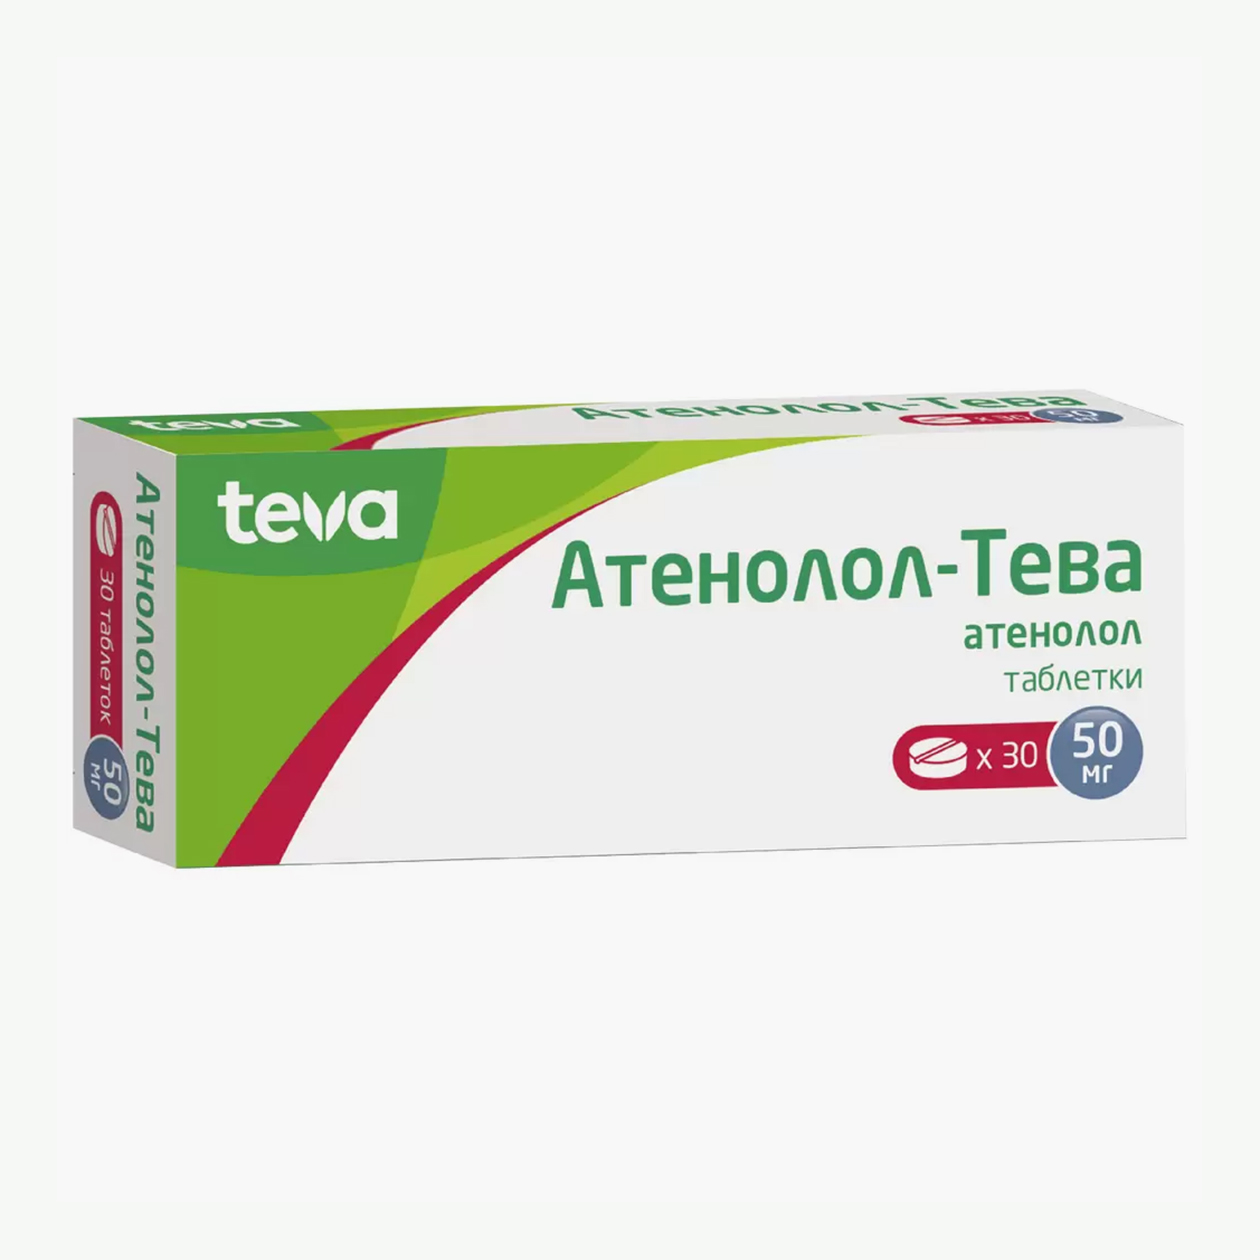 «Атенолол-Тева», 50 мг, производитель «Плива Хрватска», Хорватия